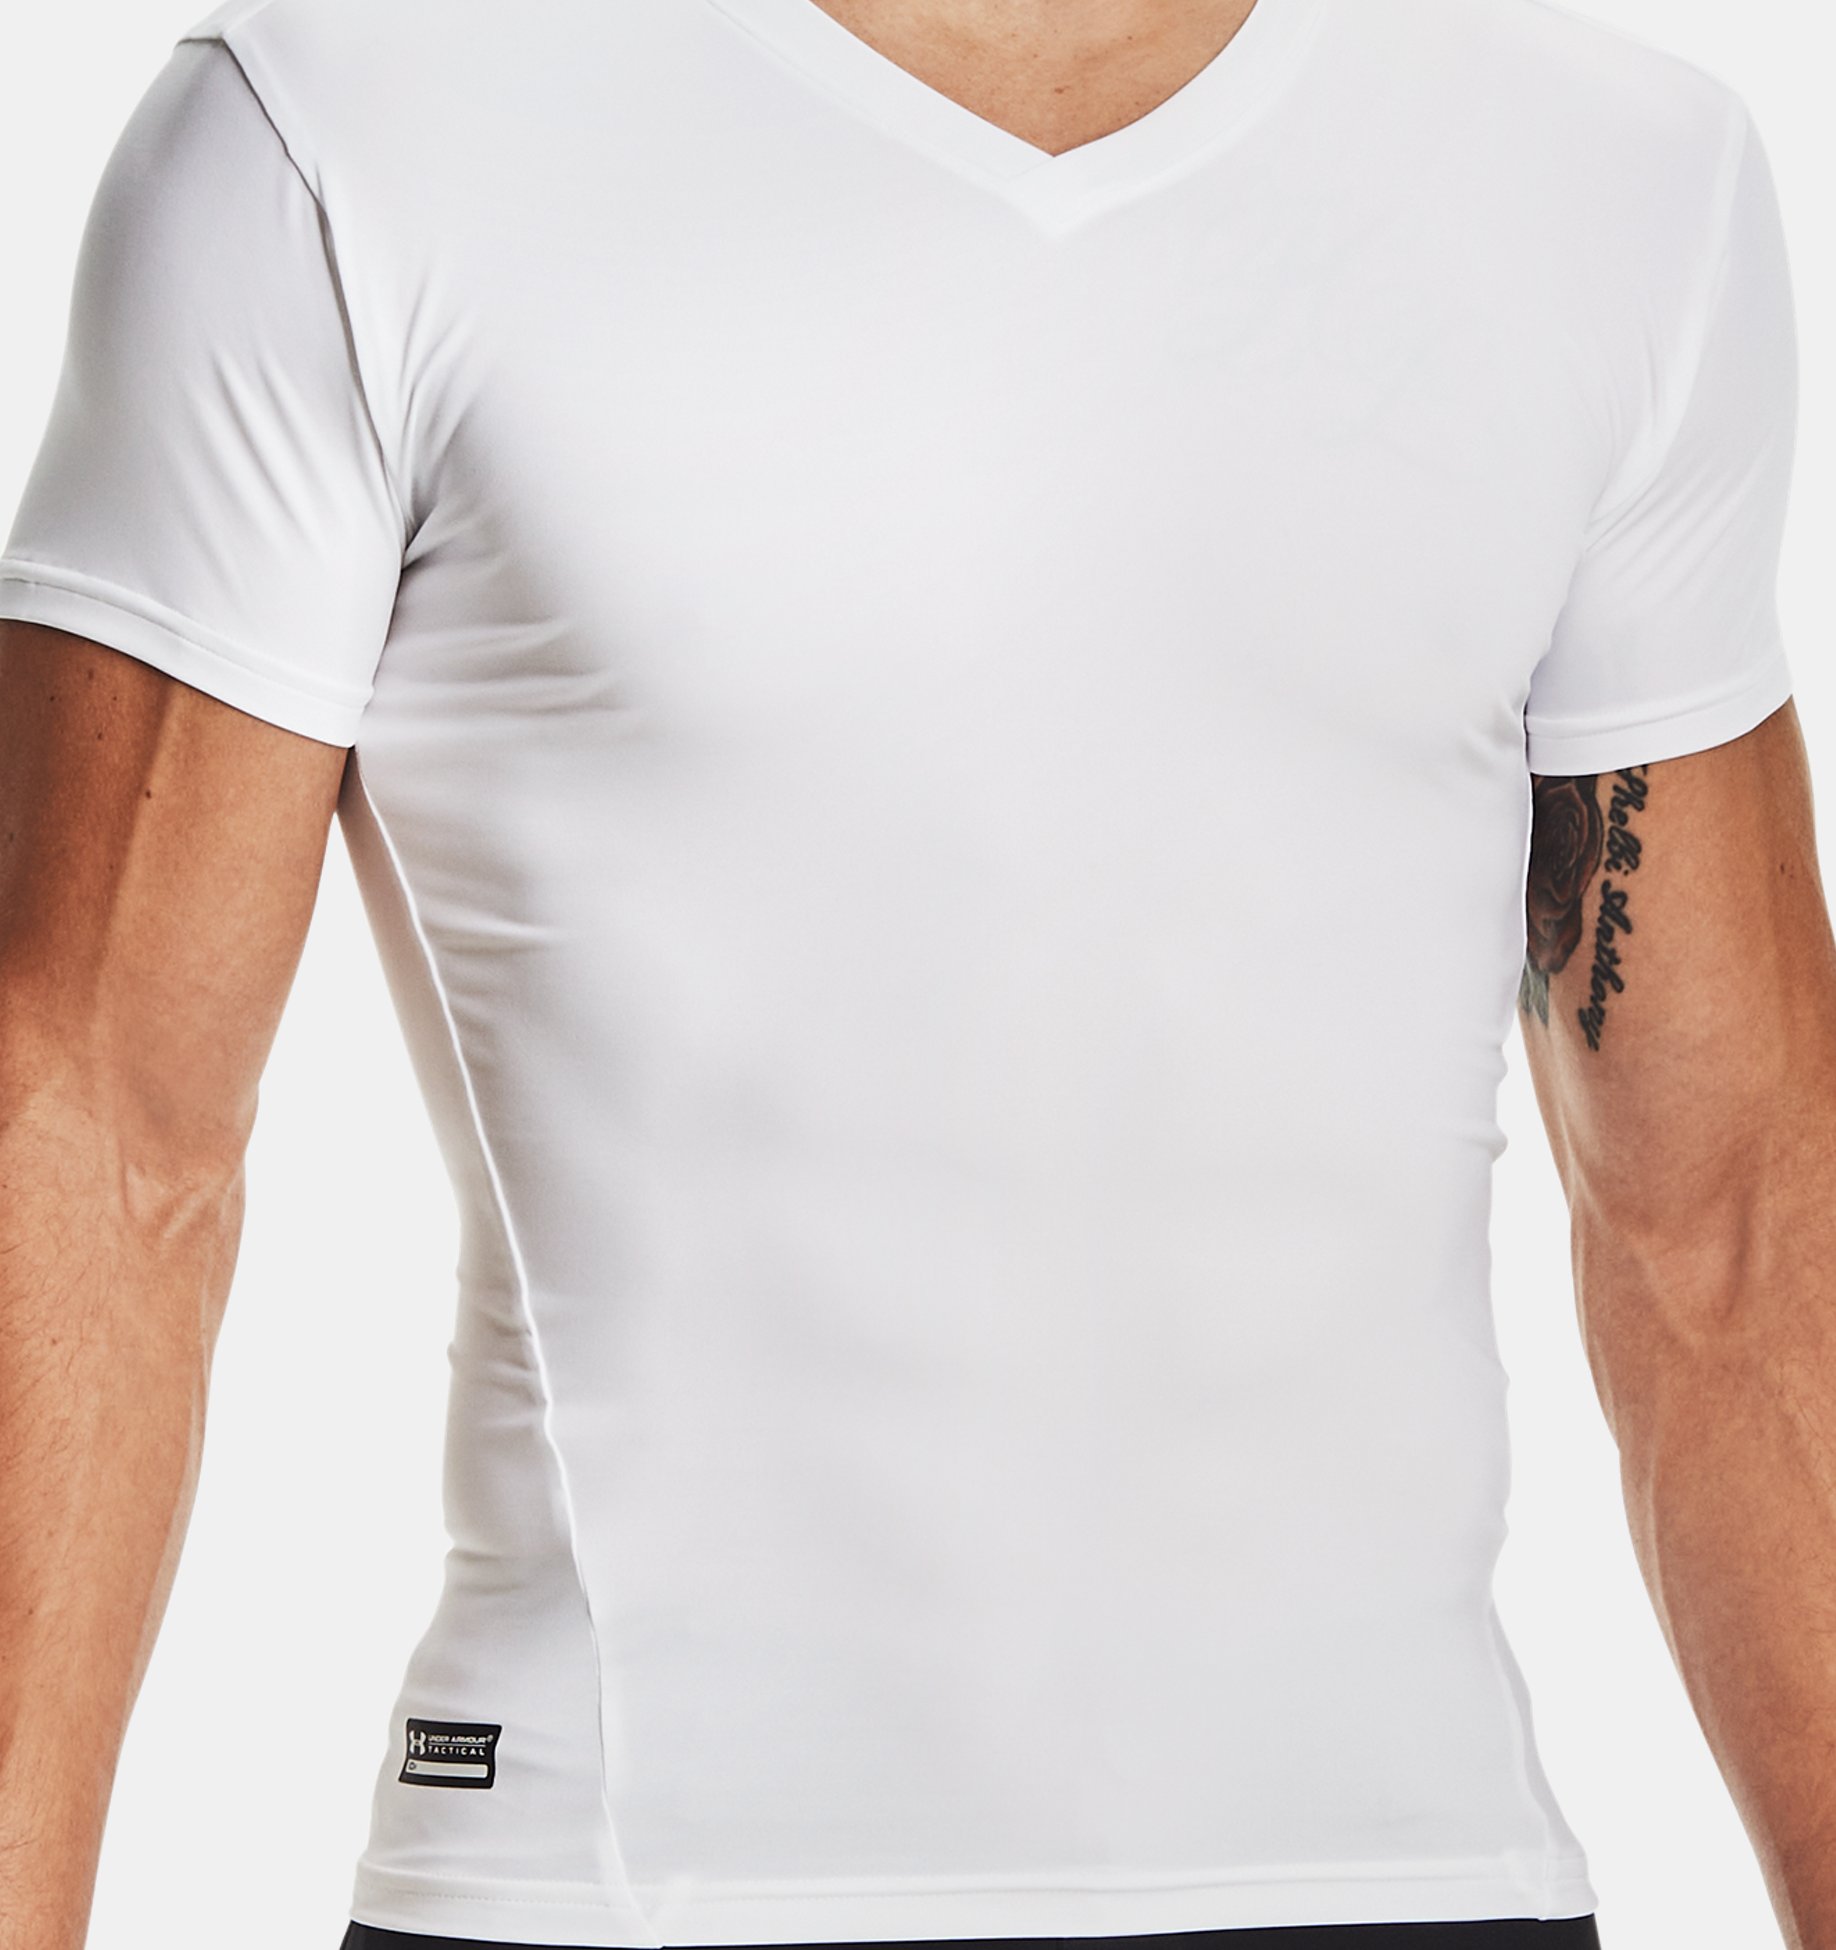 Perforatie Belichamen Wat is er mis Men's Tactical HeatGear® Compression V-Neck T-Shirt | Under Armour